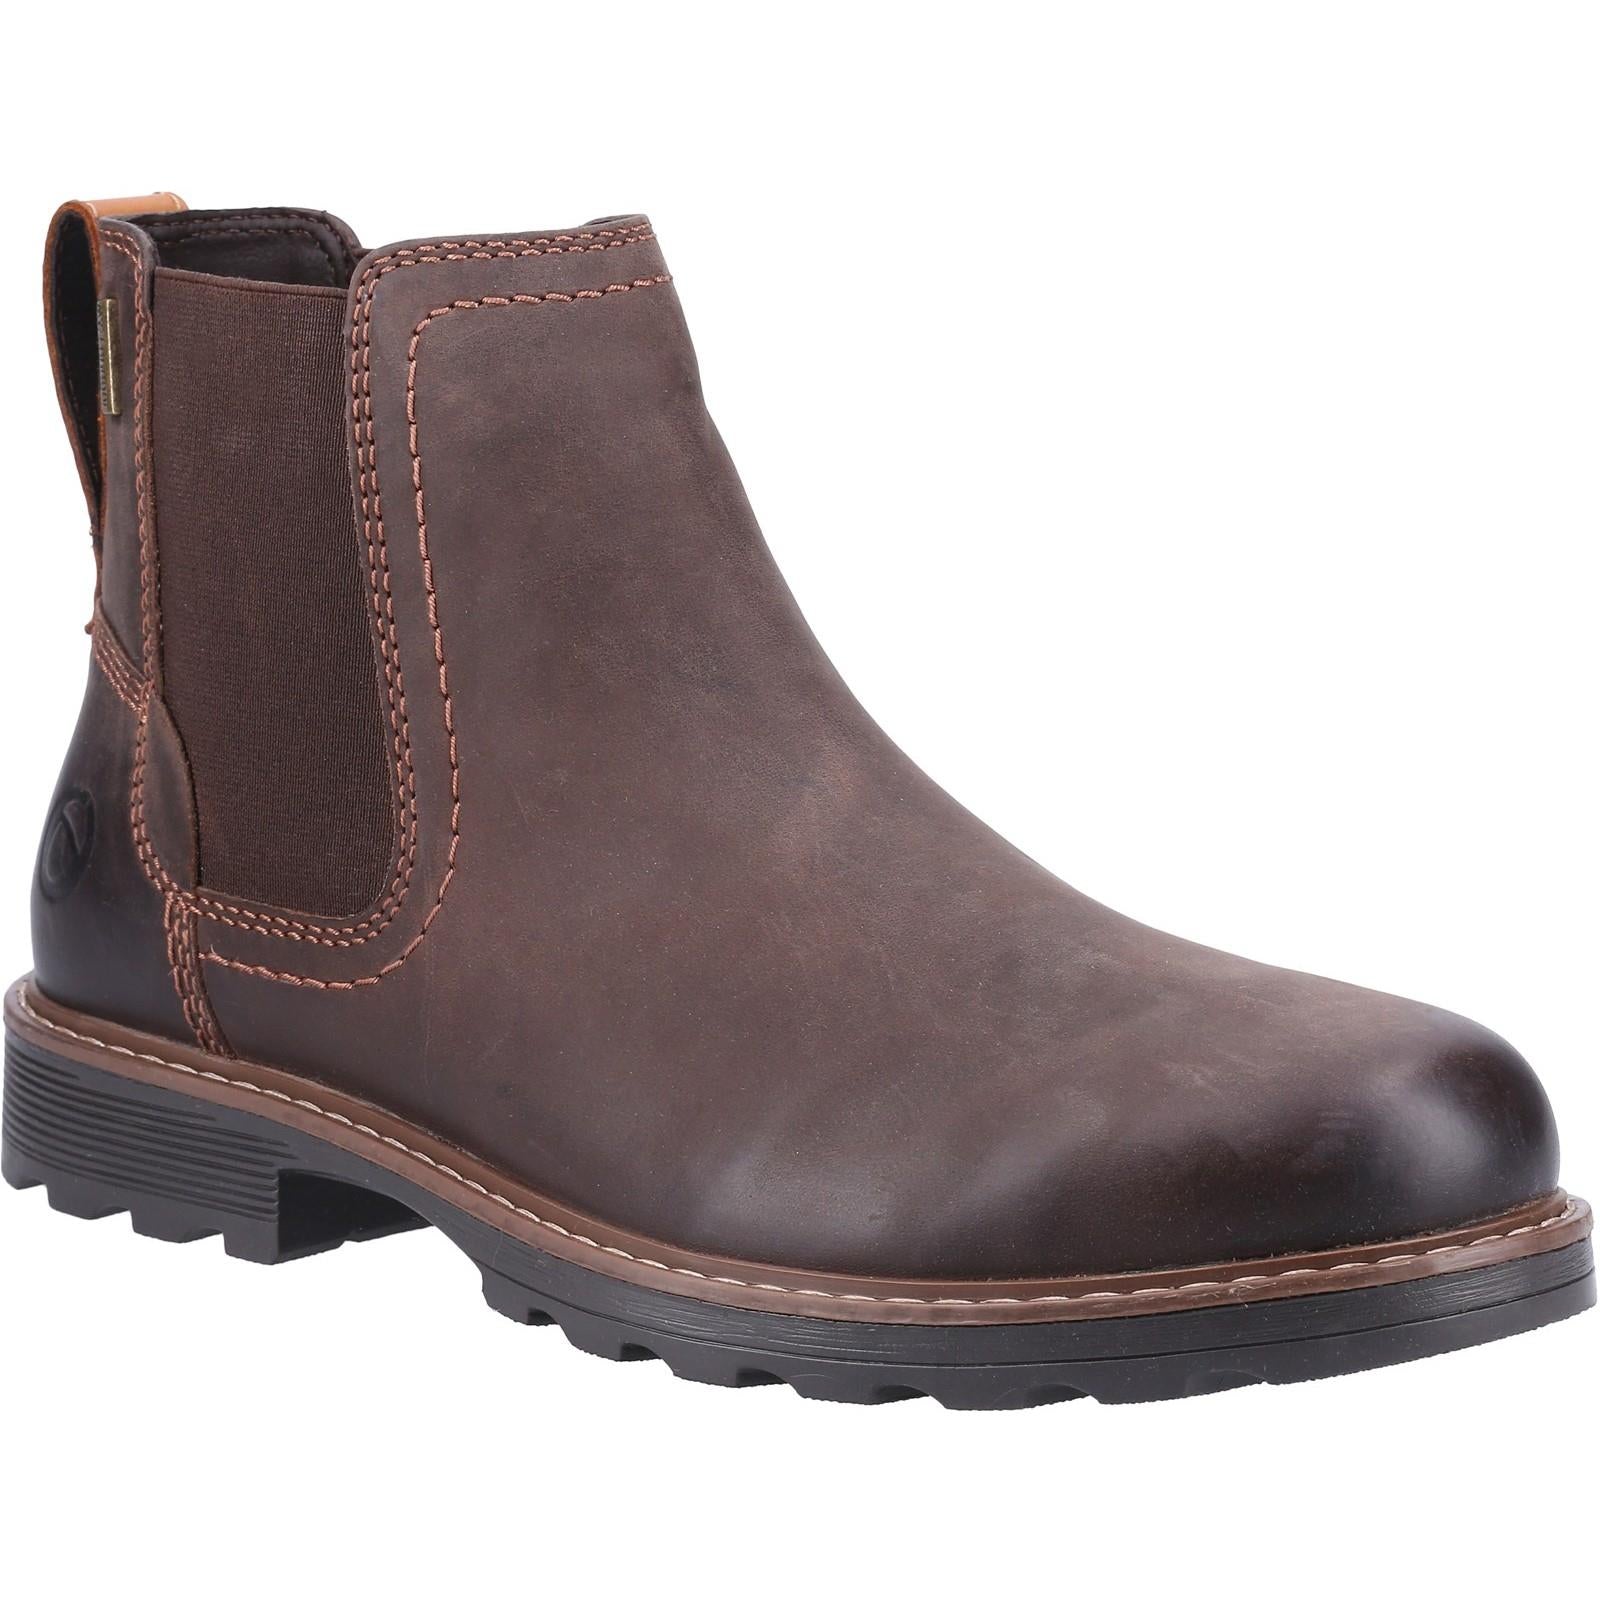 Cotswold Nibley brown nubuck leather waterproof Chelsea dealer boots